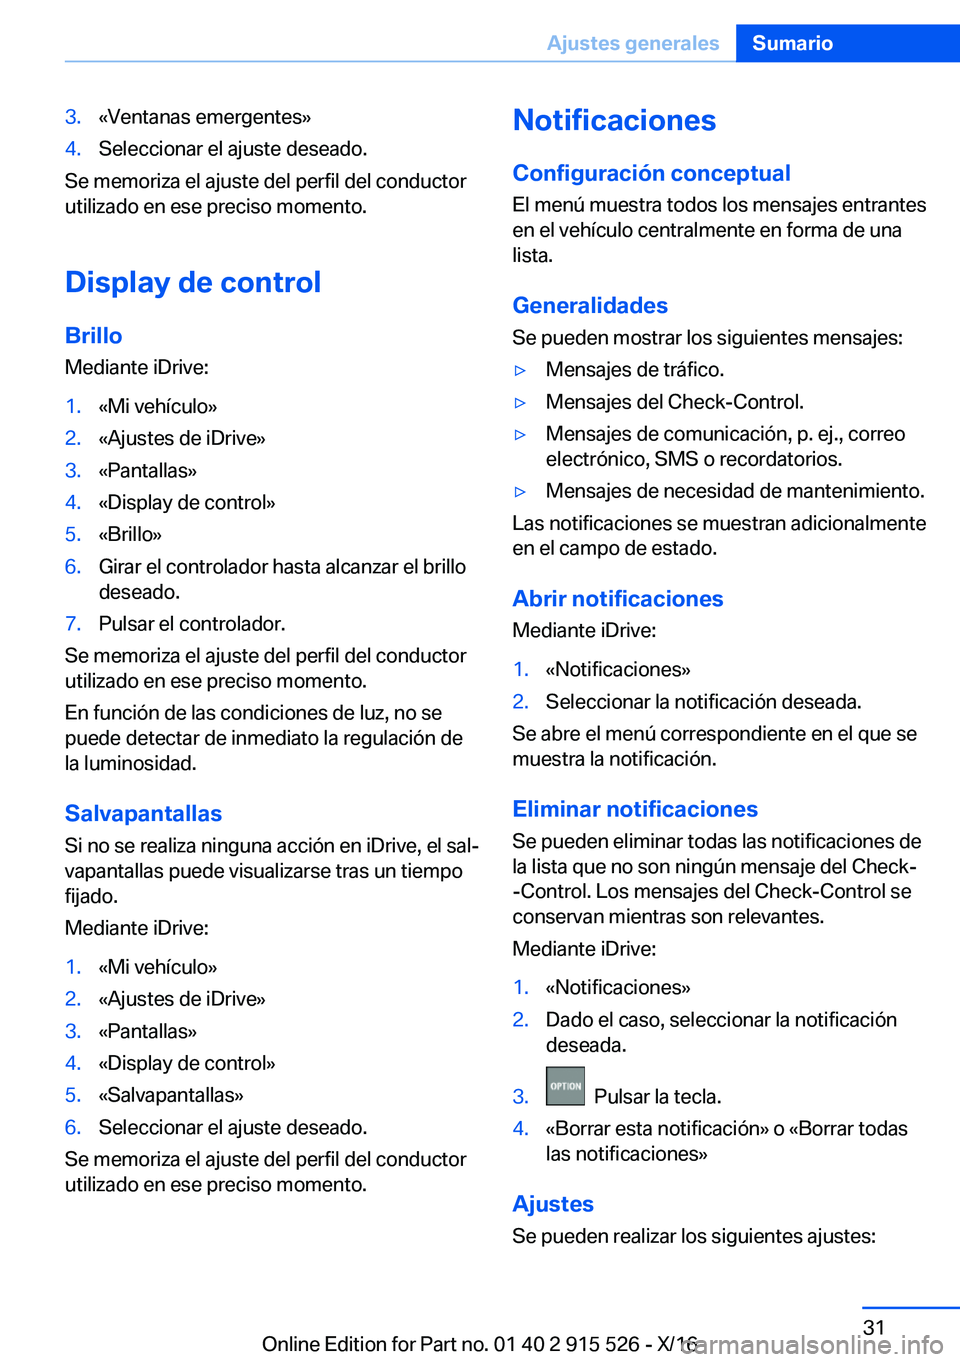 BMW X5 2017  Manuales de Empleo (in Spanish) �3�.�«�V�e�n�t�a�n�a�s� �e�m�e�r�g�e�n�t�e�s�{�4�.�S�e�l�e�c�c�i�o�n�a�r� �e�l� �a�j�u�s�t�e� �d�e�s�e�a�d�o�.
�S�e� �m�e�m�o�r�i�z�a� �e�l� �a�j�u�s�t�e� �d�e�l� �p�e�r�f�i�l� �d�e�l� �c�o�n�d�u�c�t